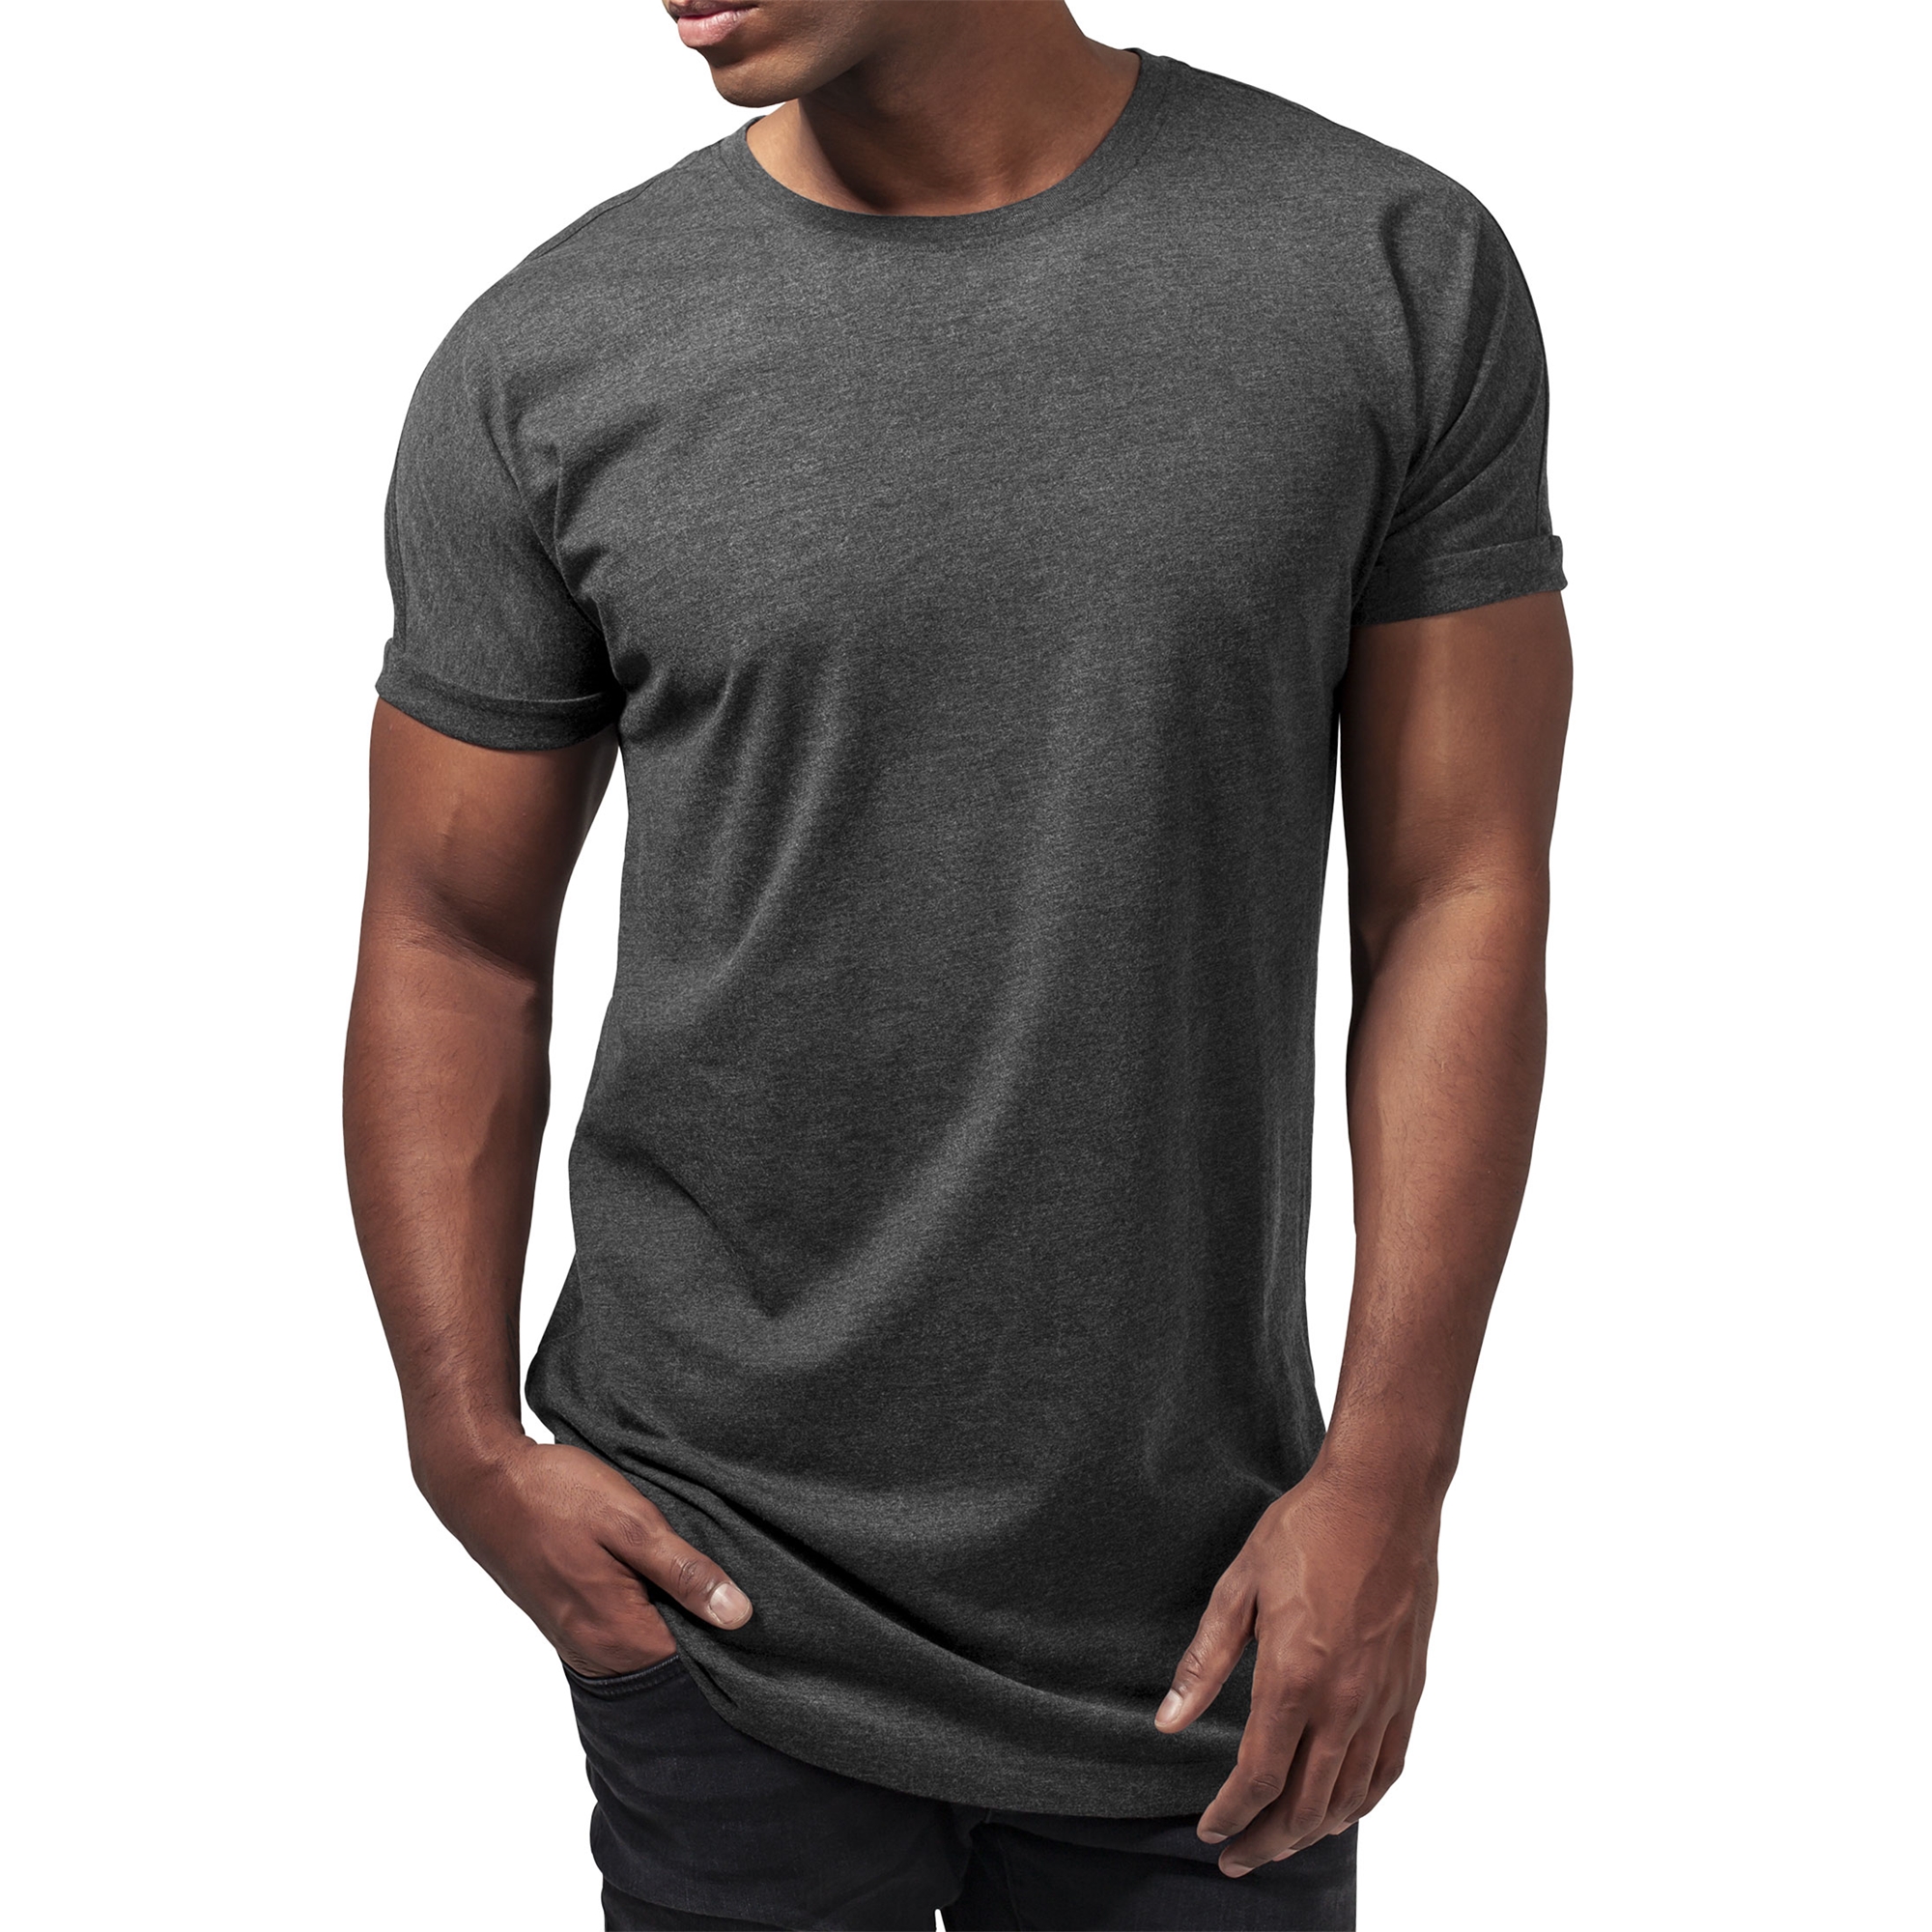 Urban Classics Herren T-Shirt Shaped Shirt Tee Turnup lang extra Long oversize | eBay